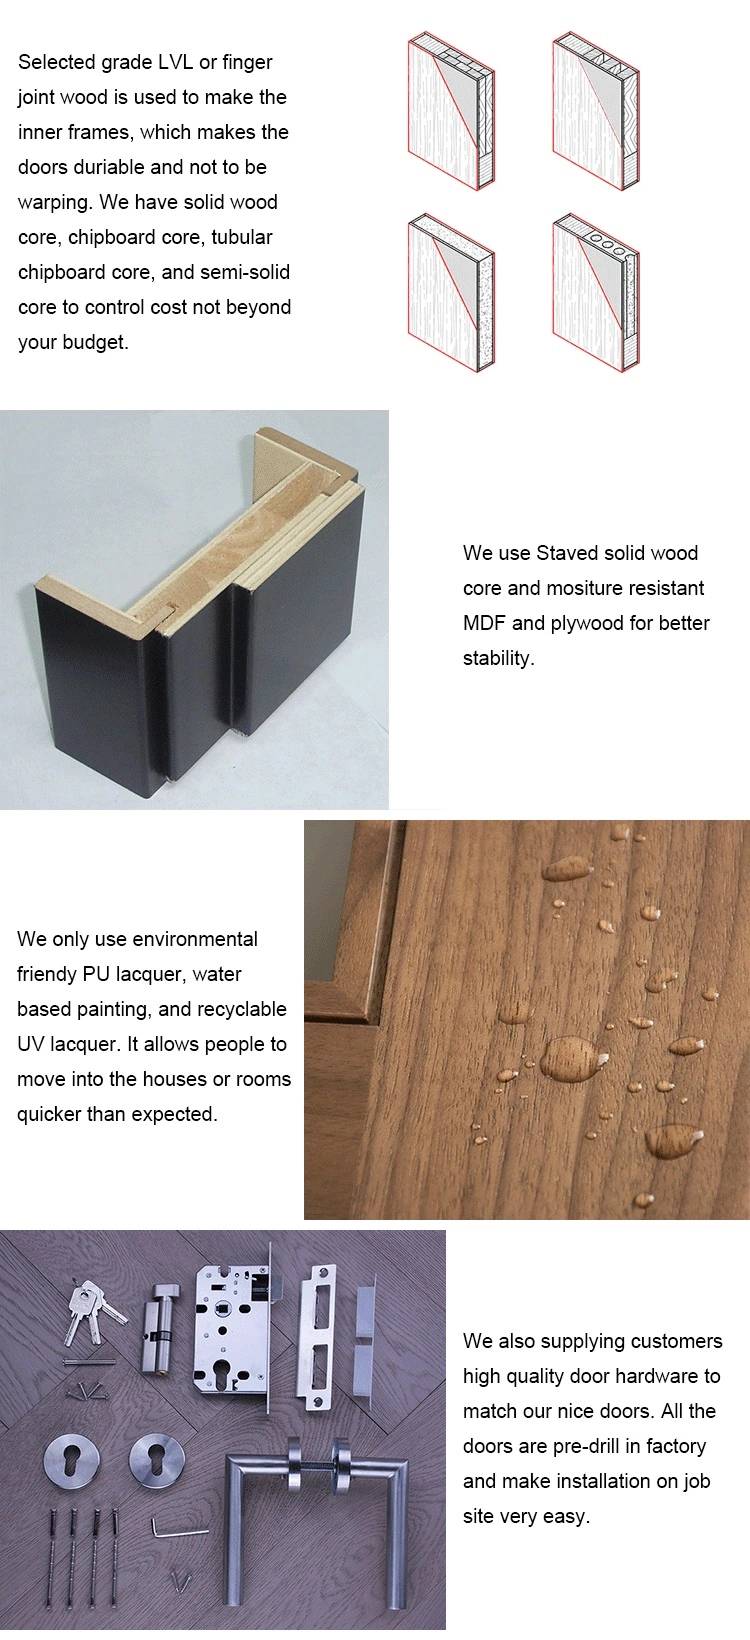 Best Selling Prehung Internal Walnut Wood Panels Flush Doors Modern Interior